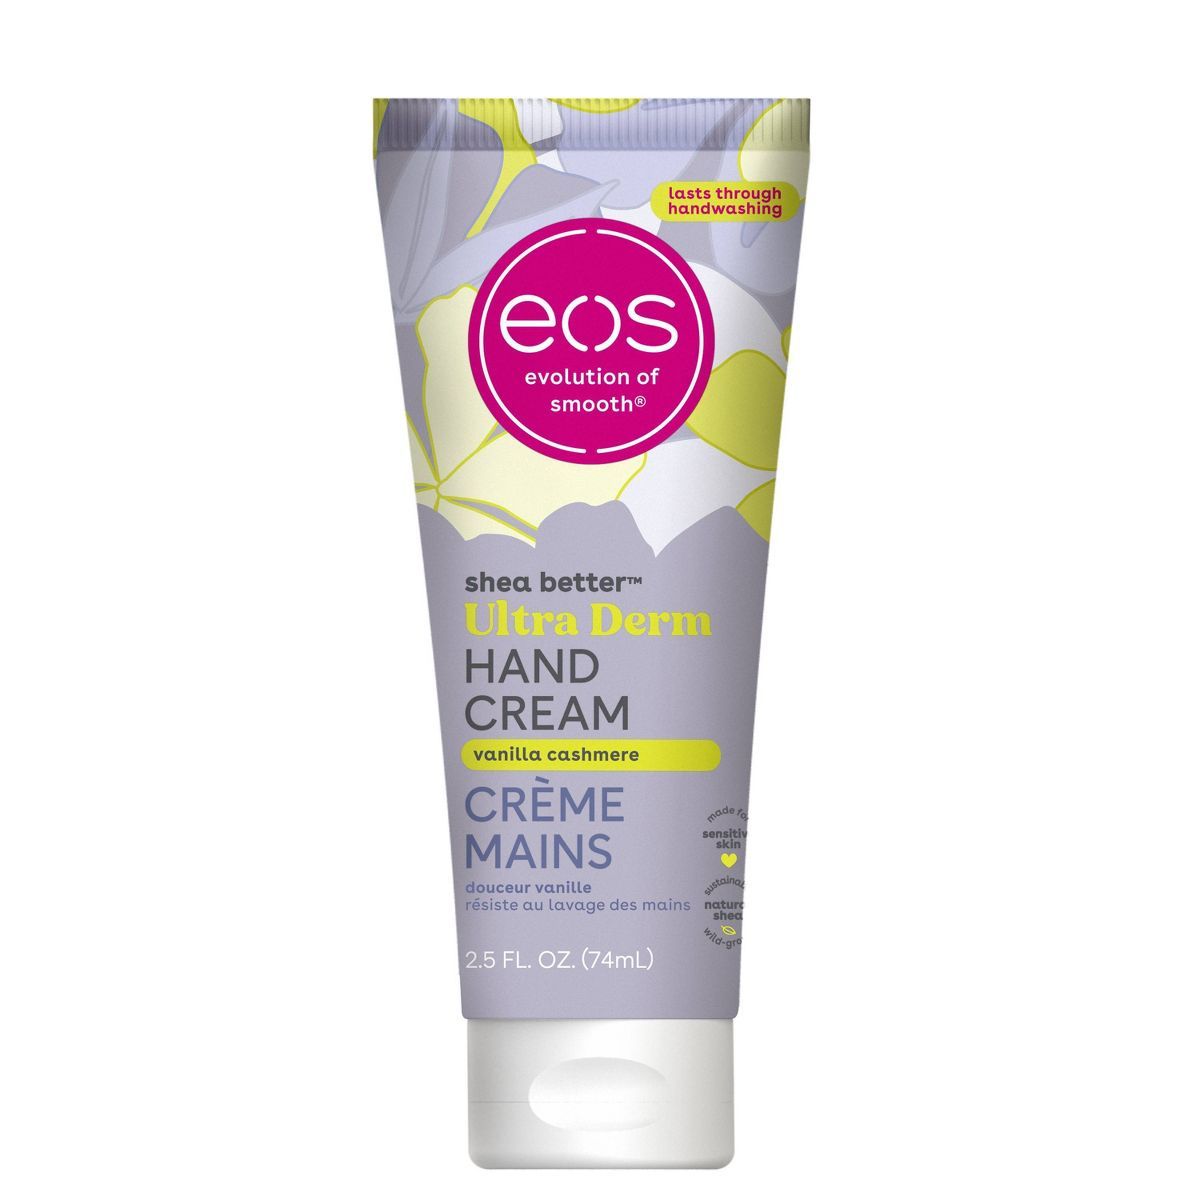 eos Shea Better Hand Cream - Vanilla Cashmere - 2.5 fl oz | Target